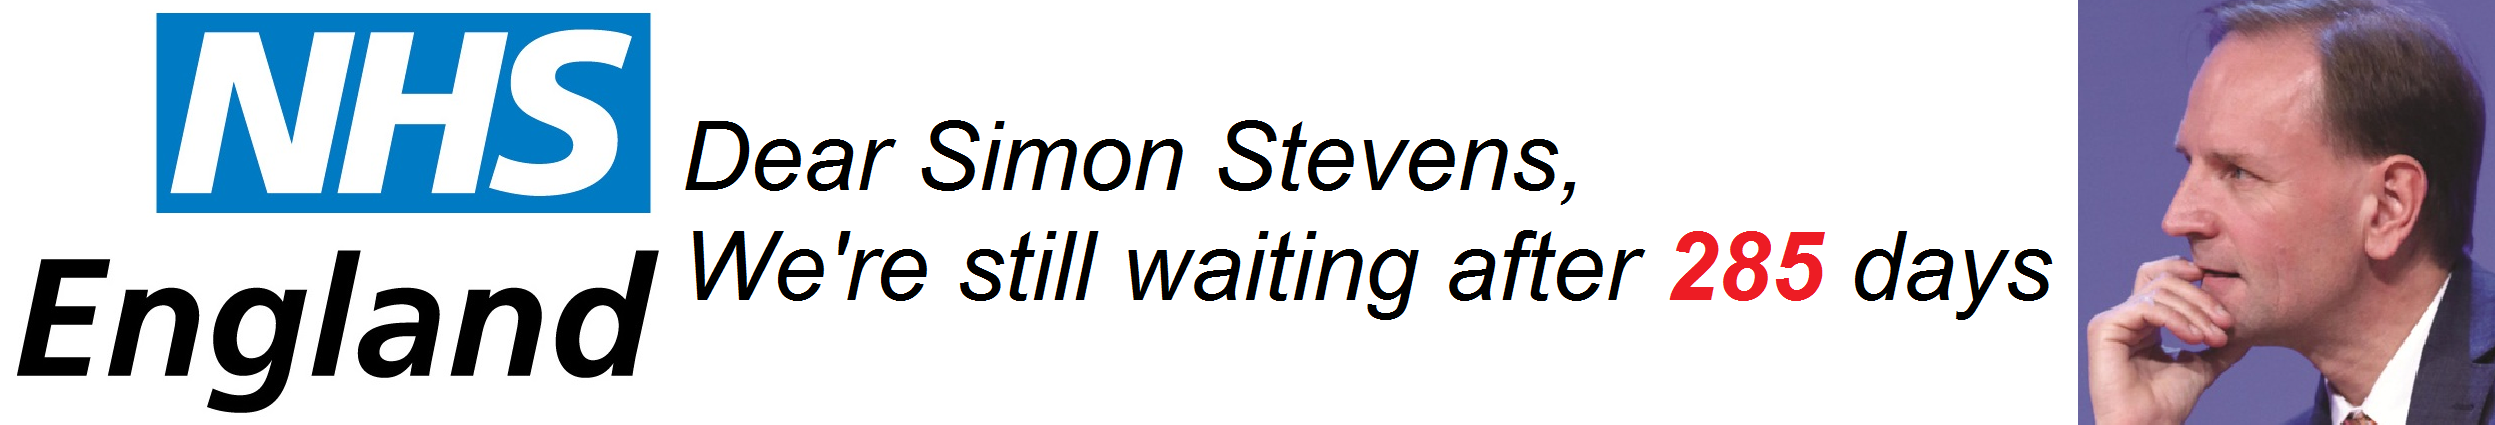 NHS England Simon Steven still waiting after 285 days